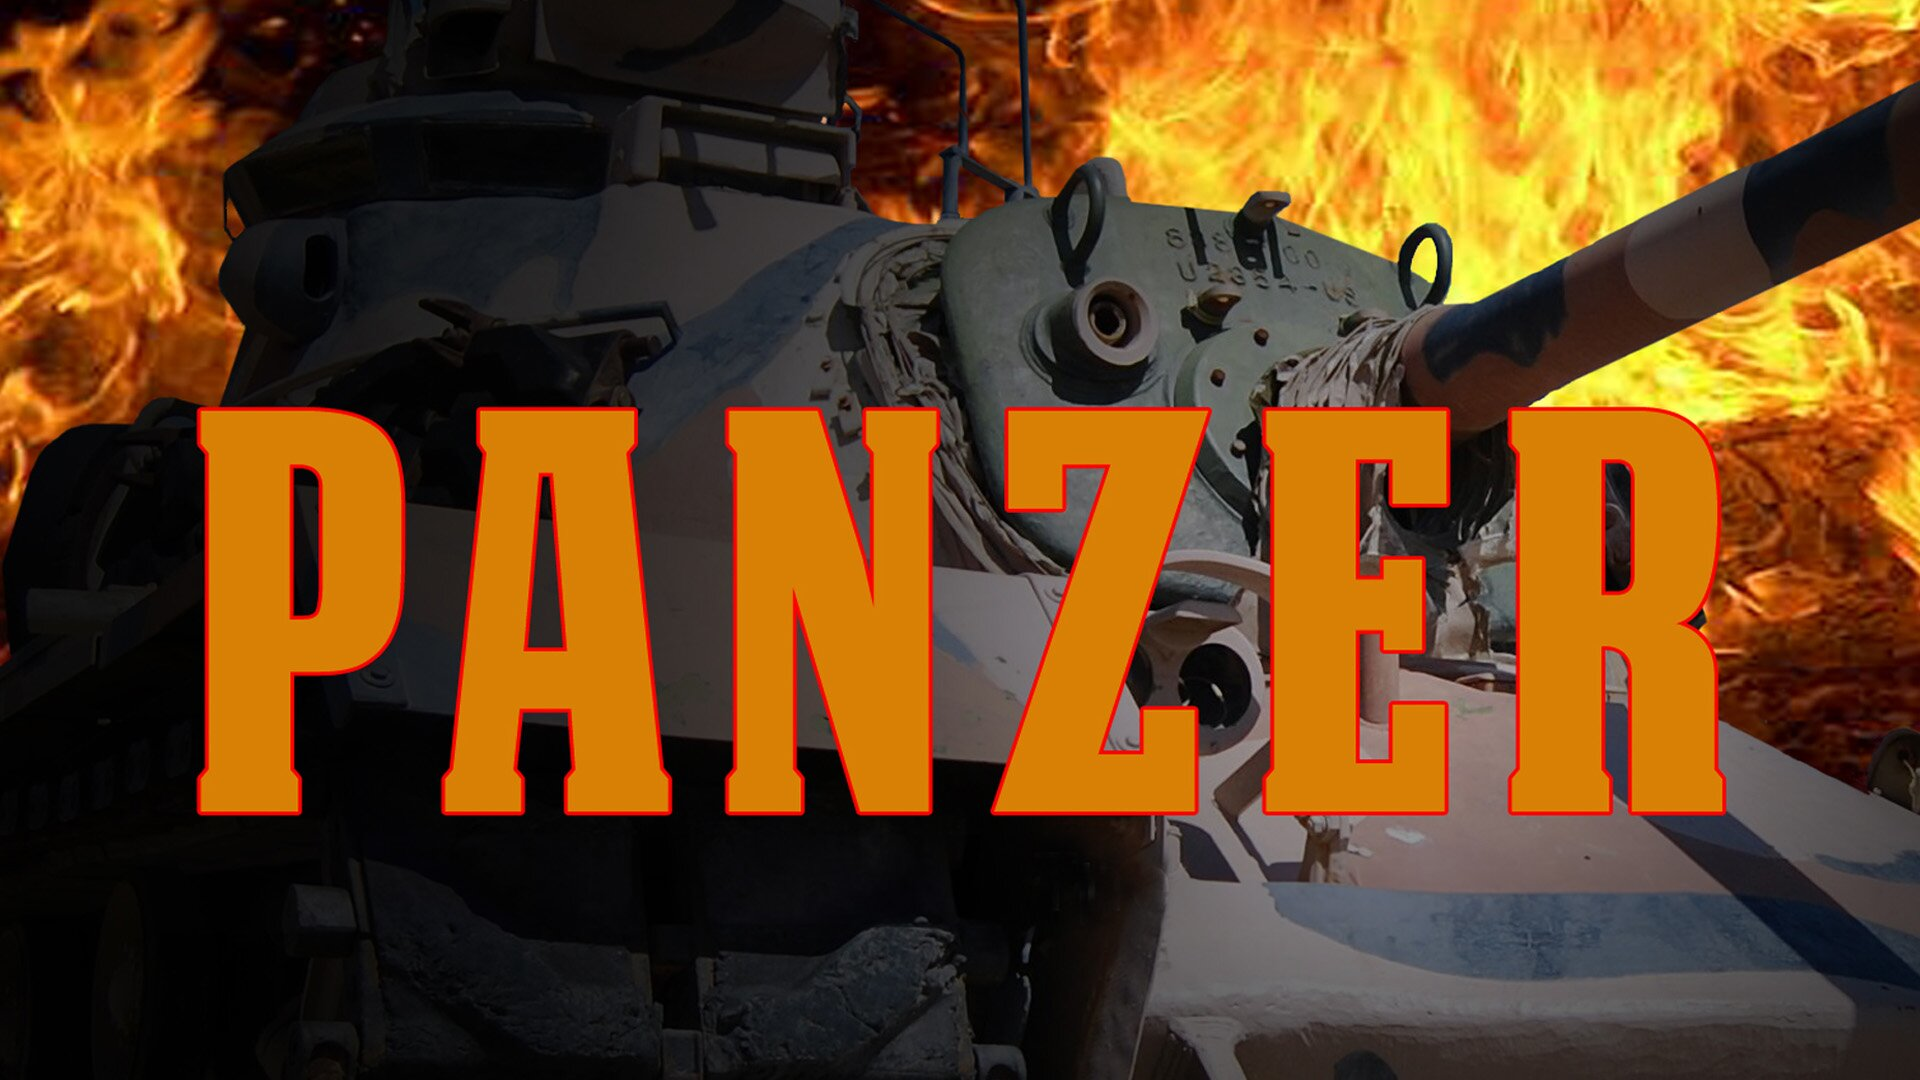 The Panzer